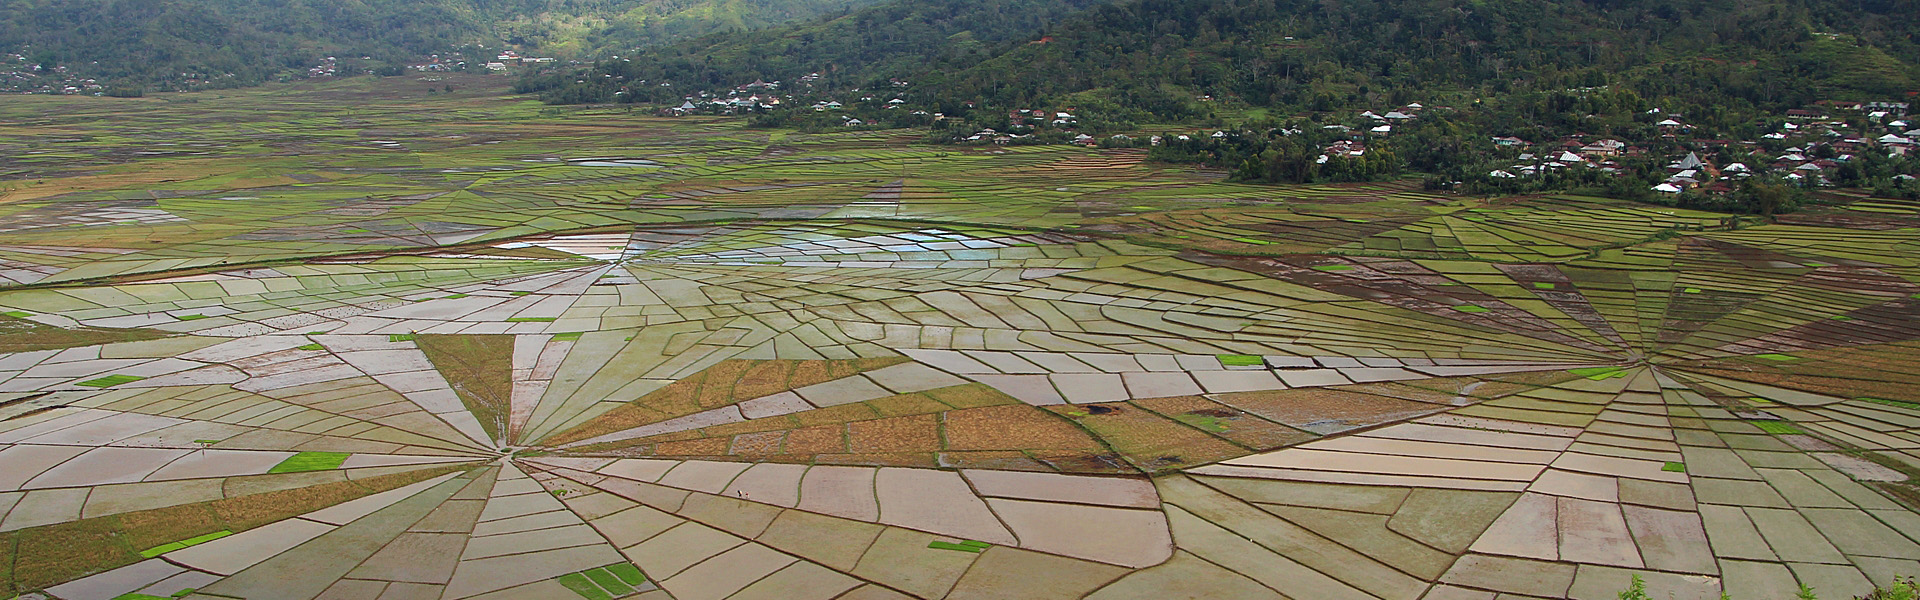 Linkgo spider rice fields near Cancar Village, Manggarai region, central Flores